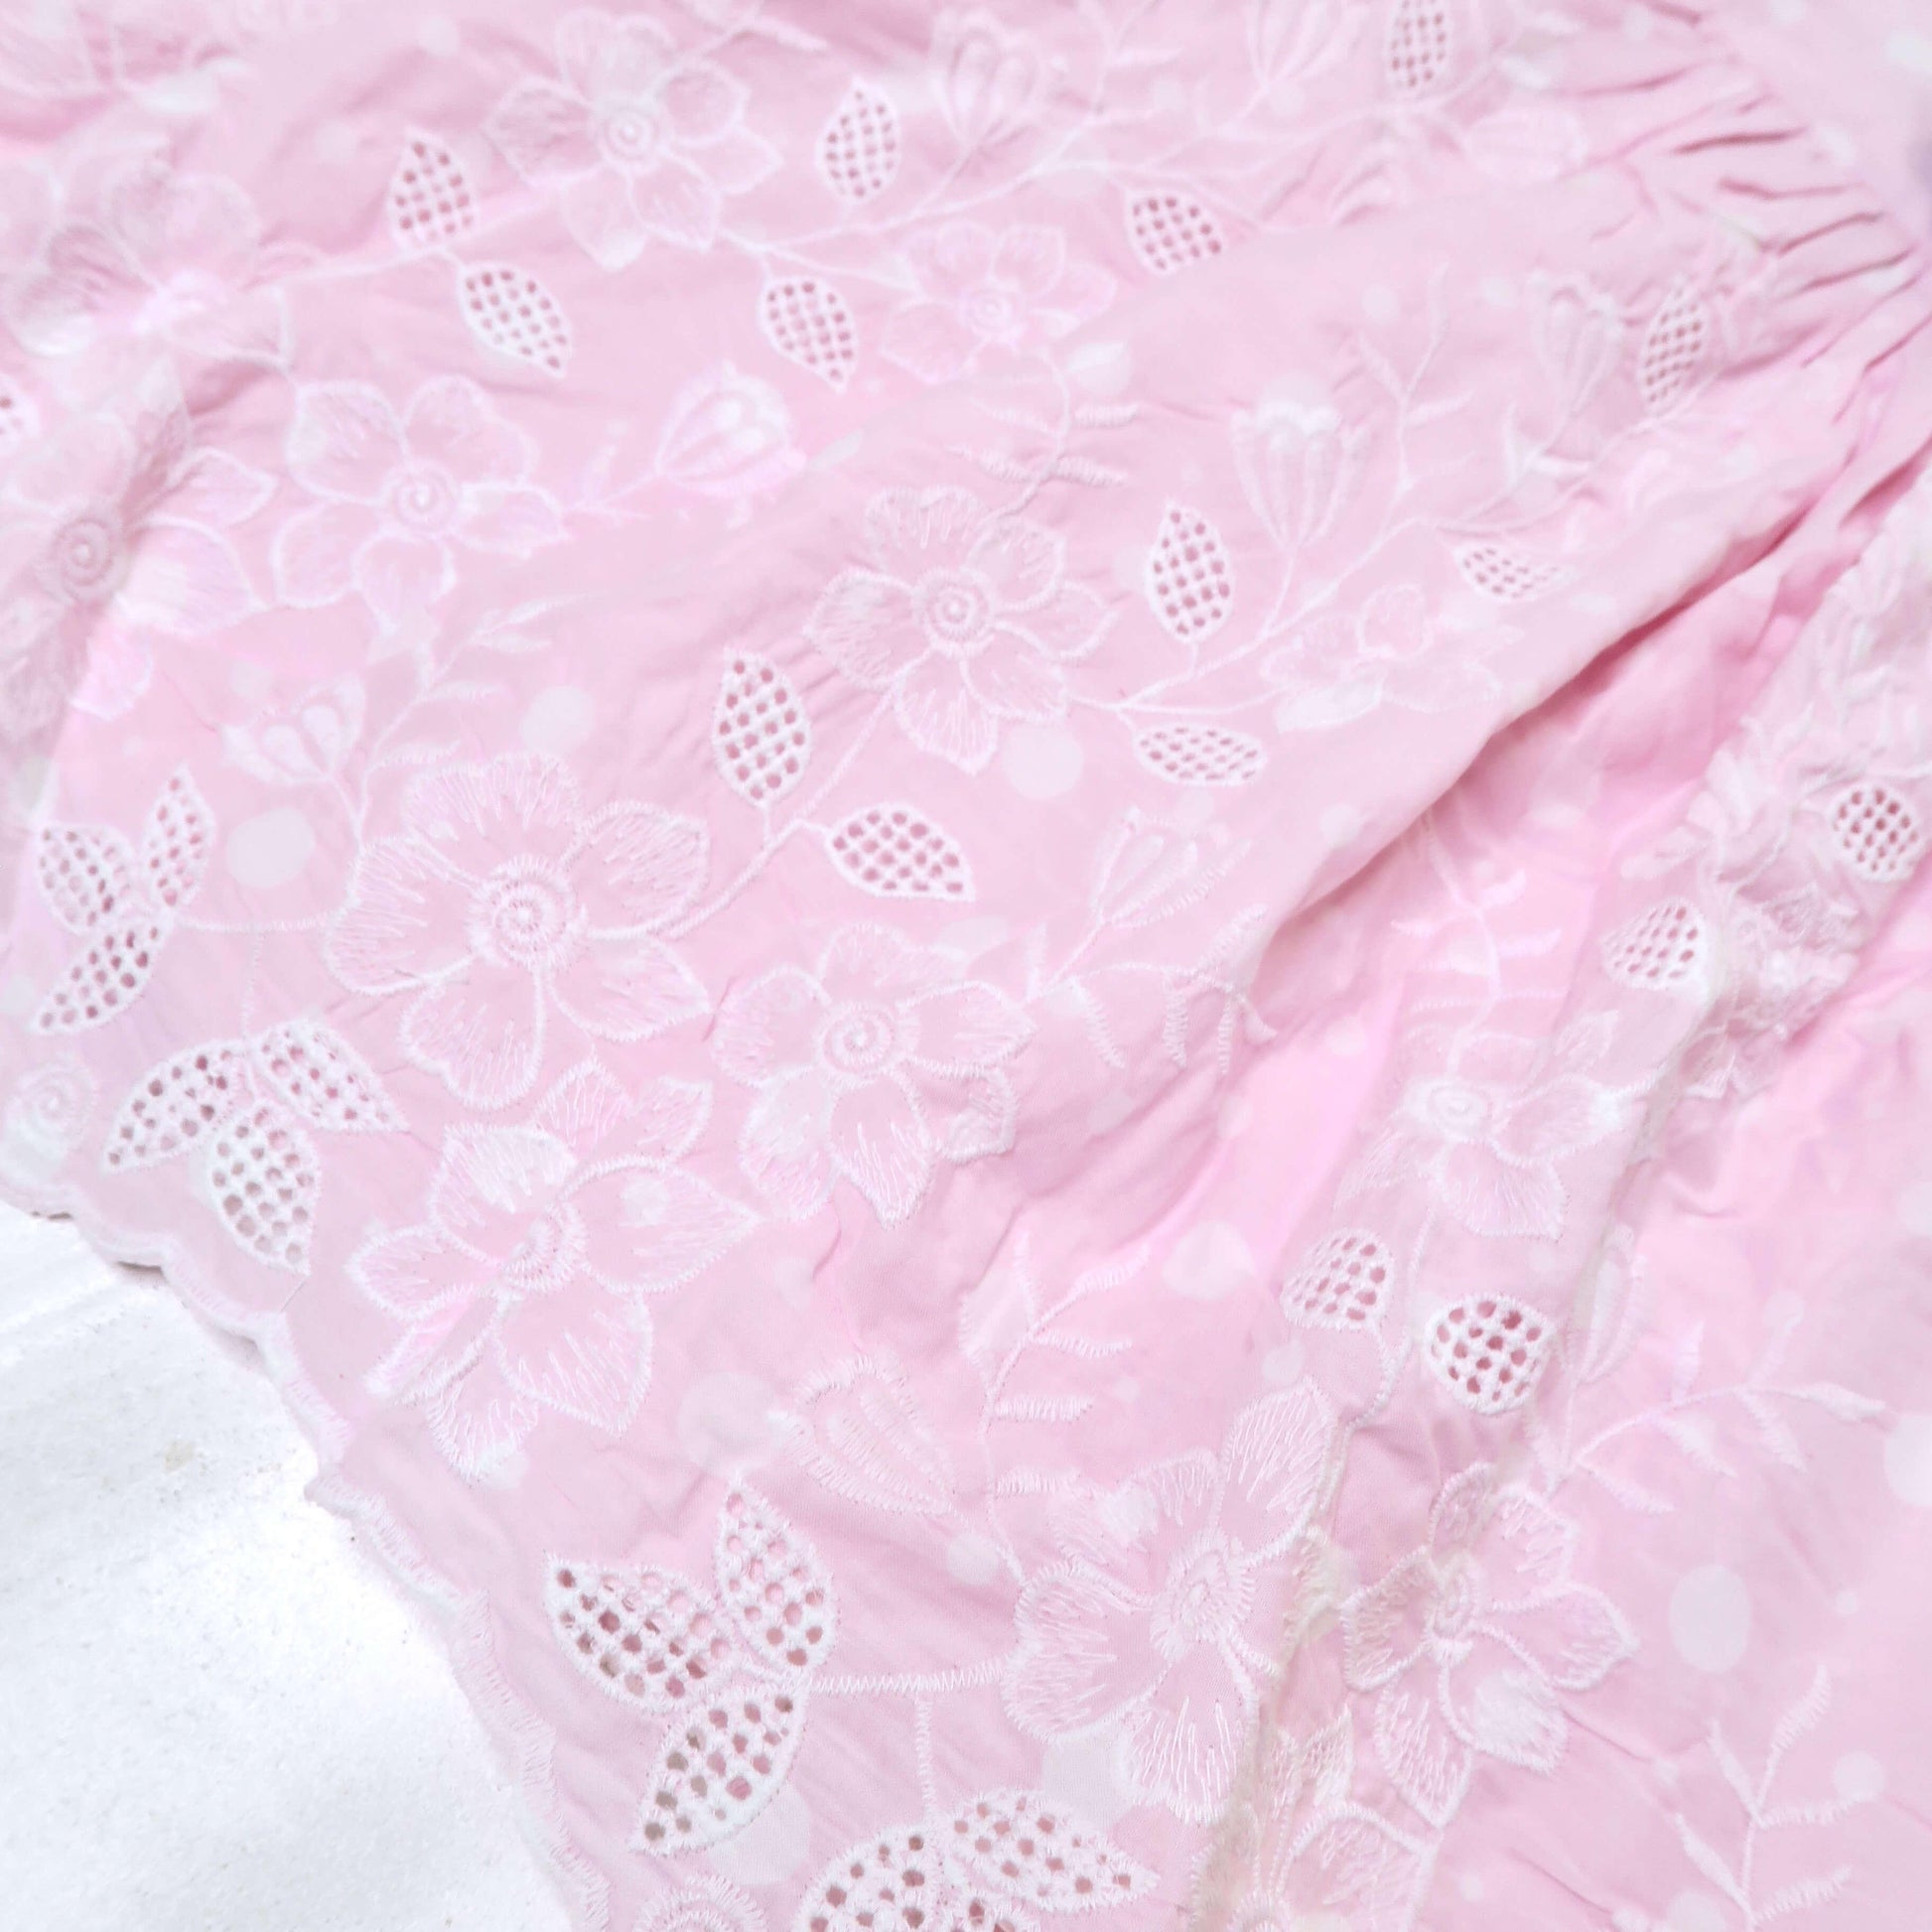 Dahlia Dress in Pink Polka Floral Embroidery - Lil' Tati